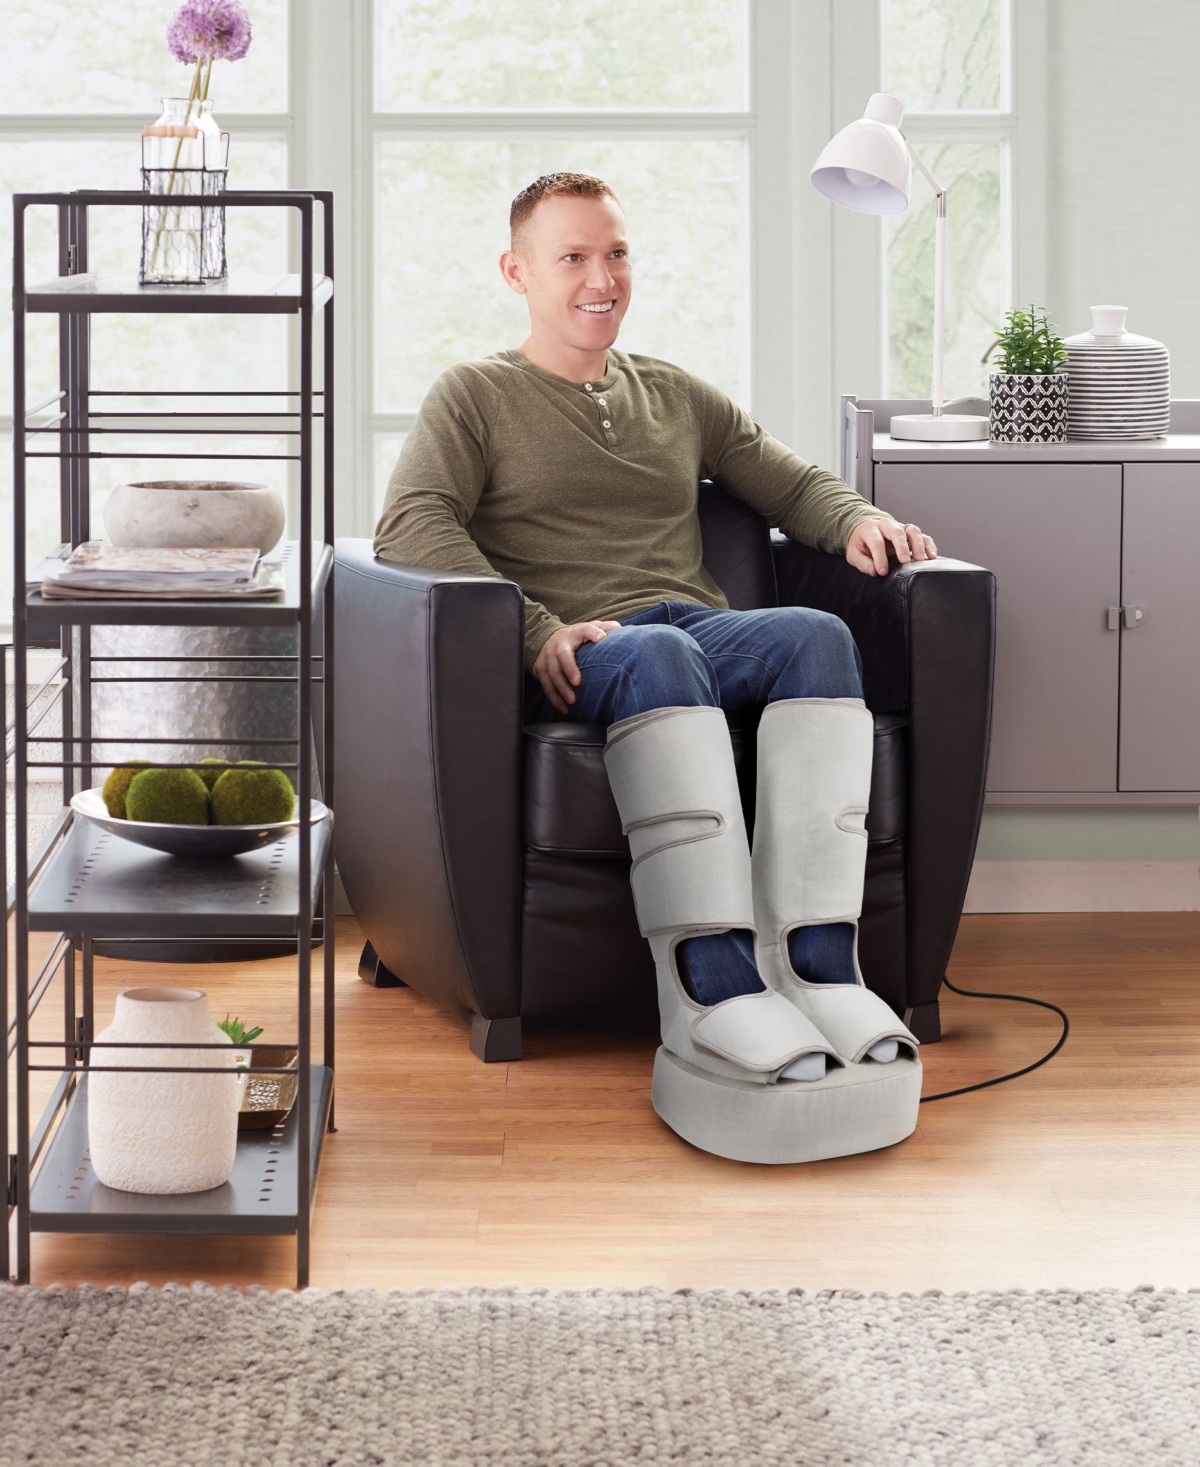 Shop Homedics Real Relief Leg & Foot Massager In Gray